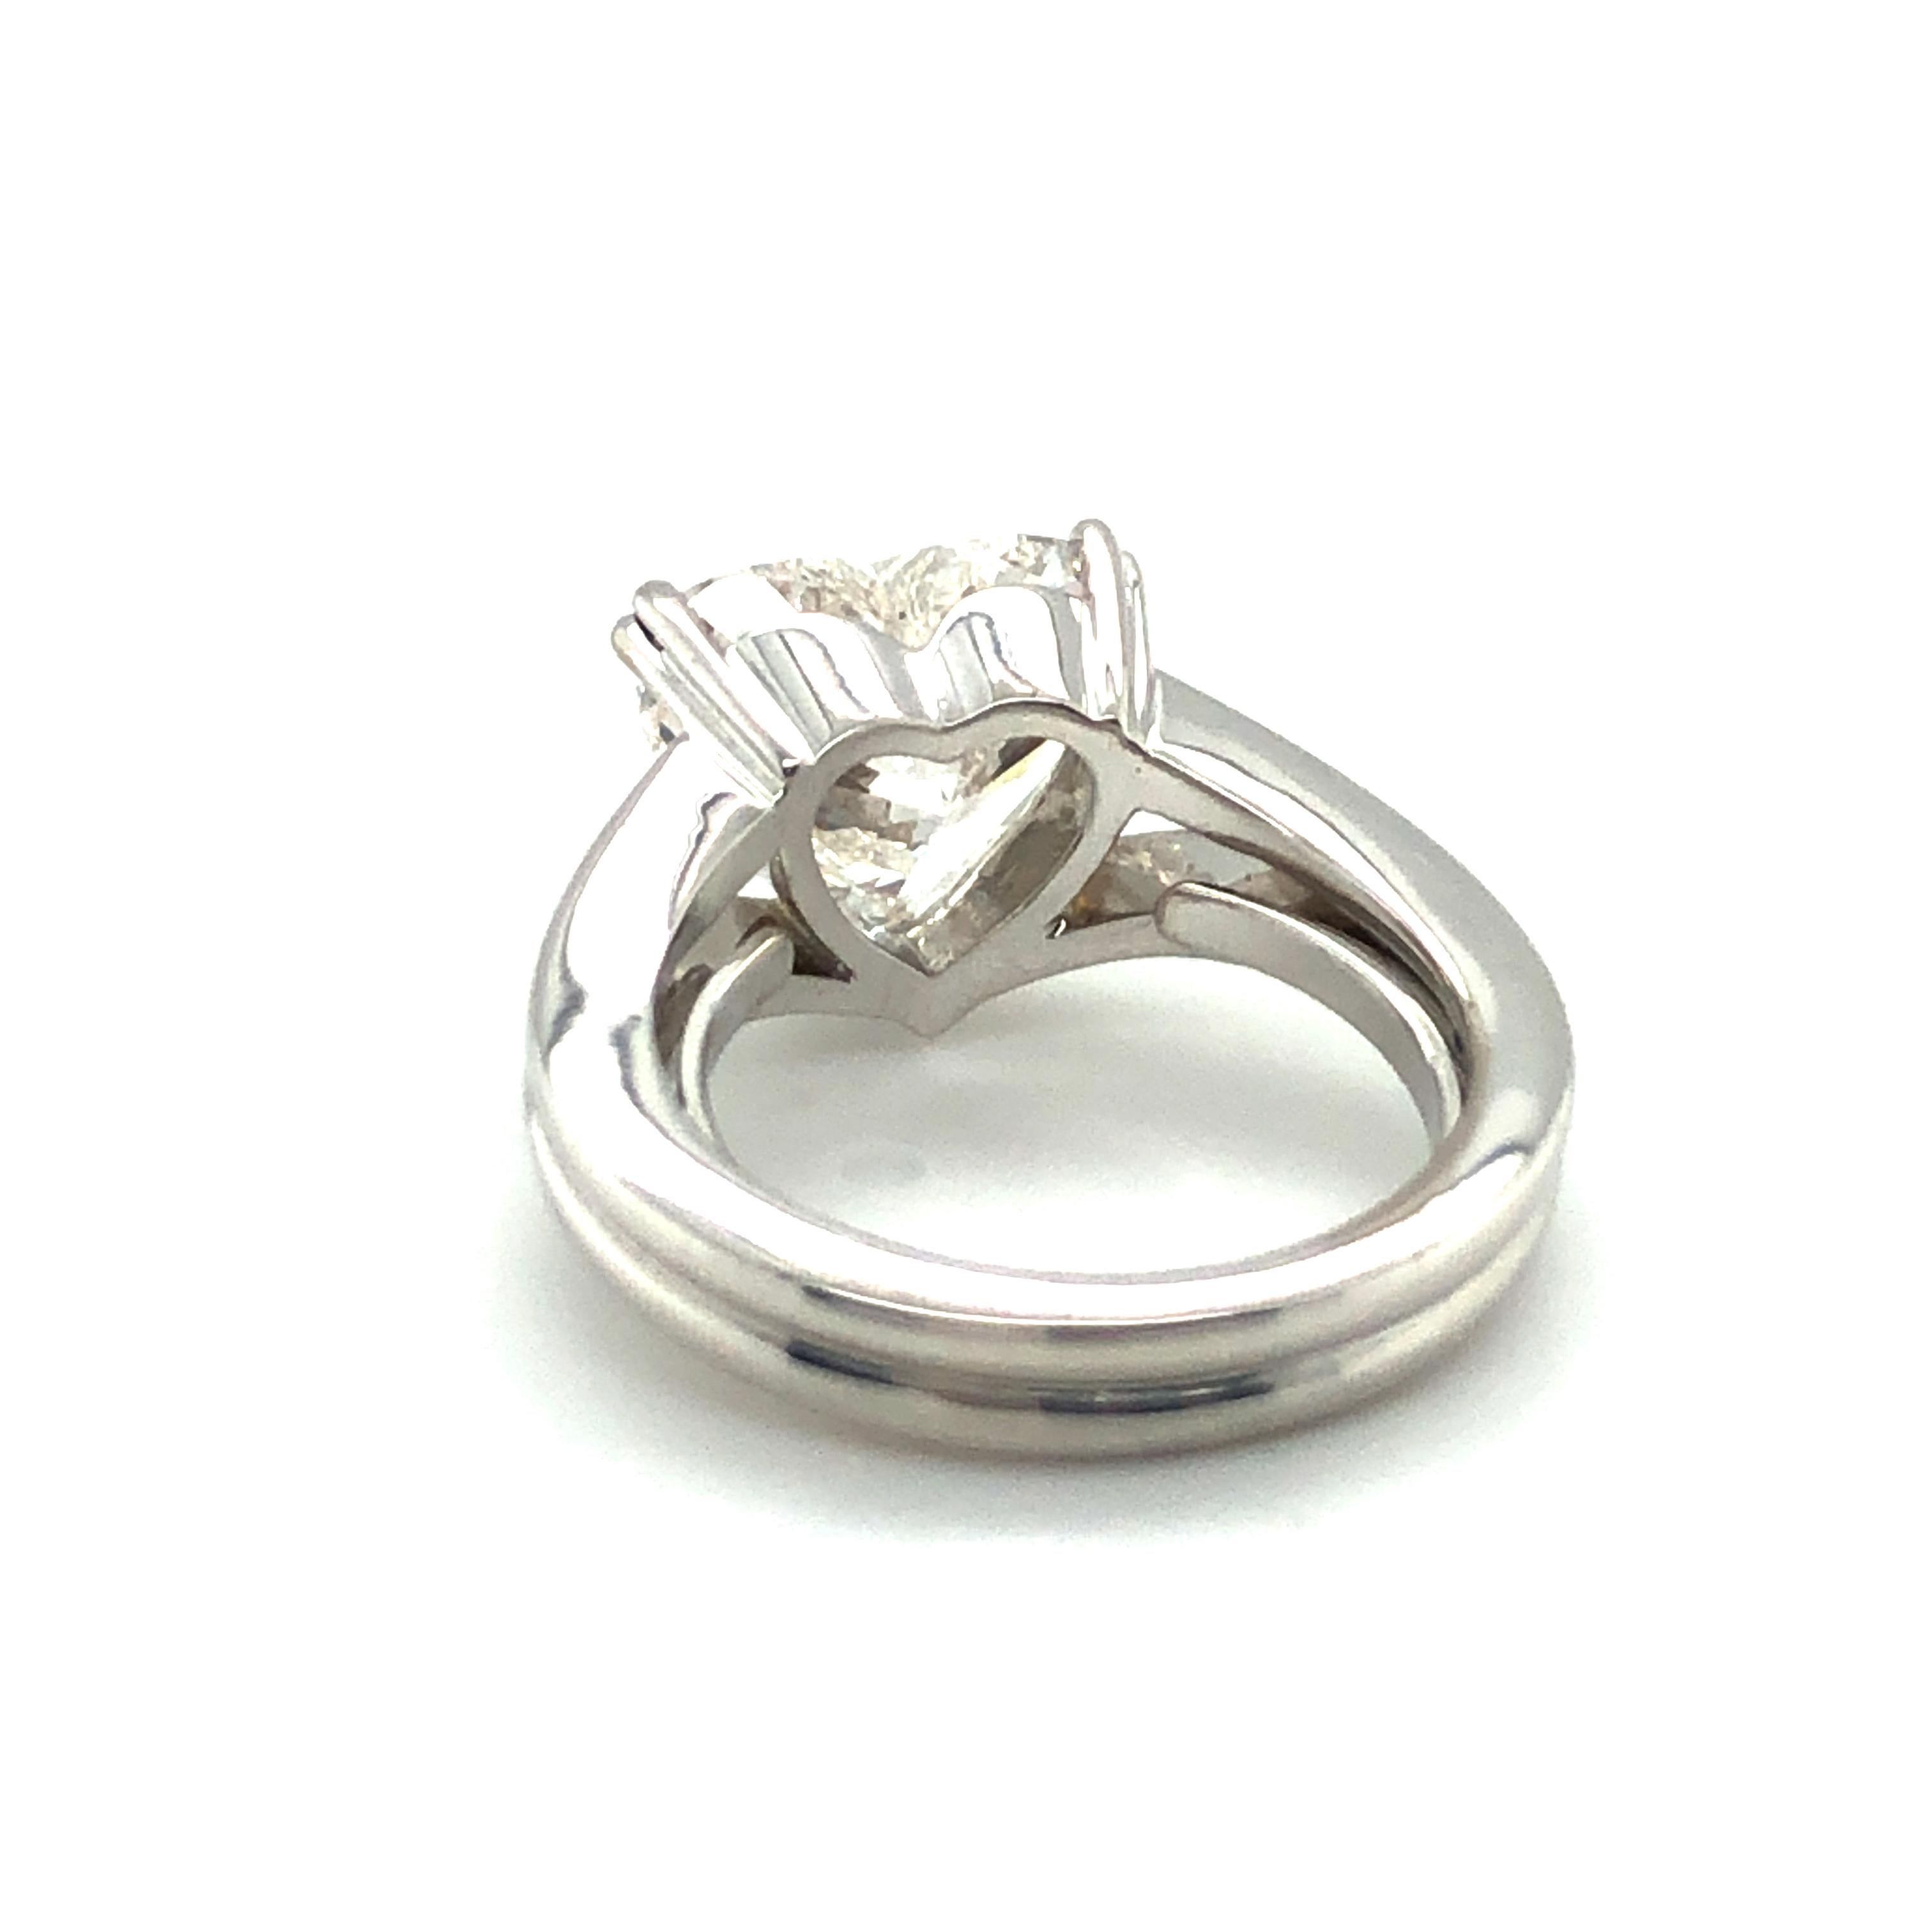 2 carat heart shaped diamond solitaire